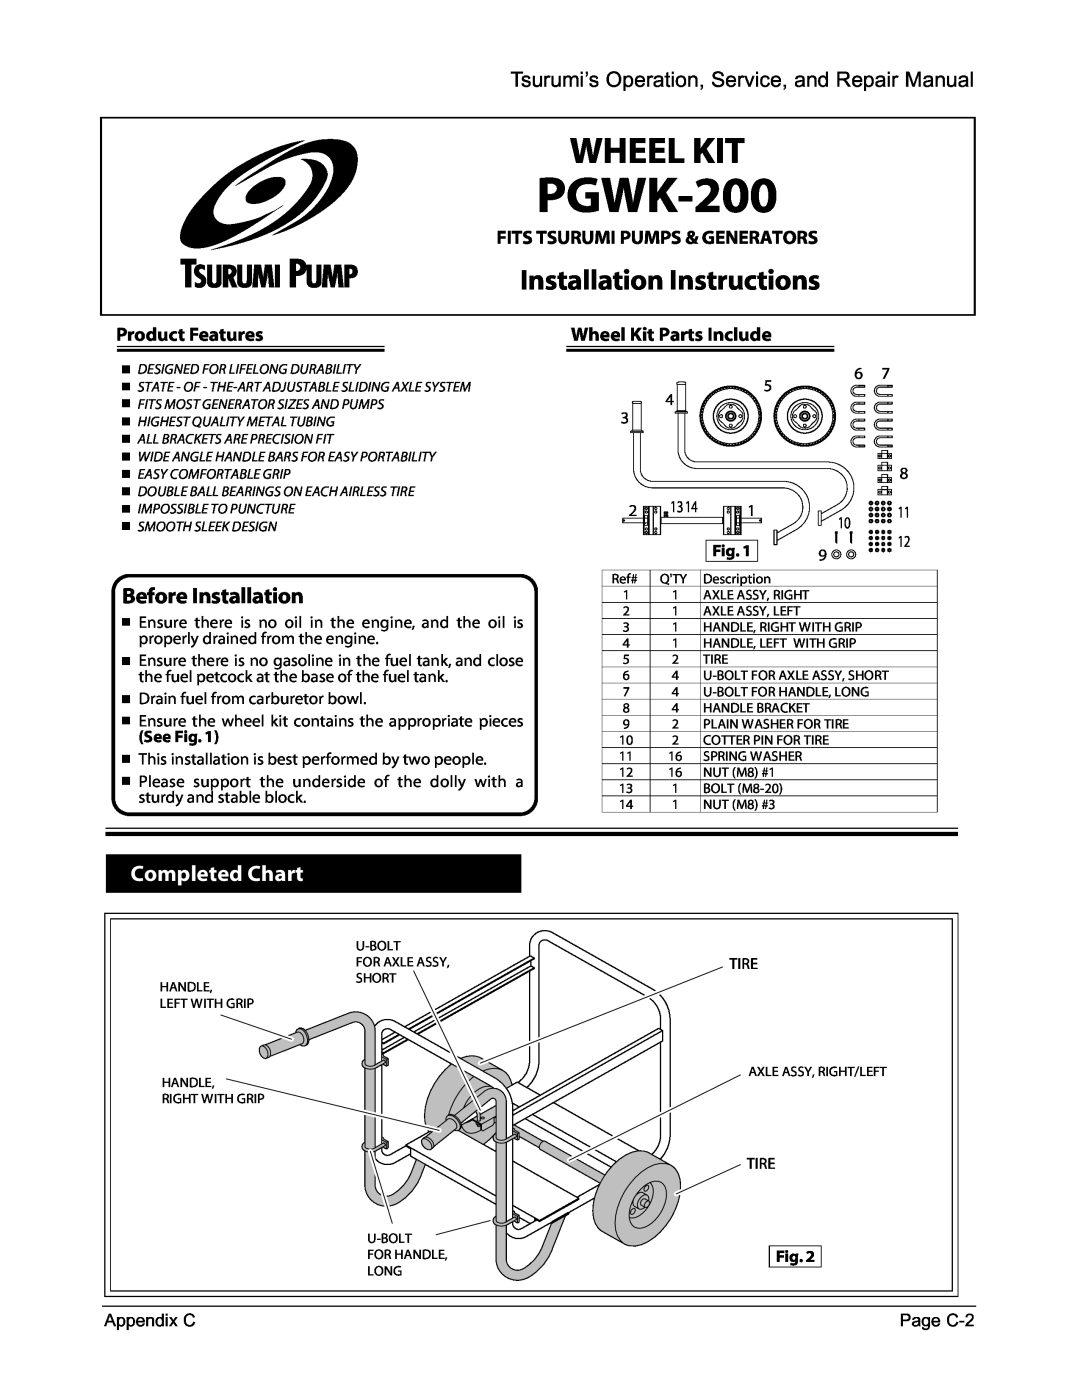 Honda Power Equipment TPG-4300H-DX Before Installation, Completed Chart, PGWK-200, Wheel Kit, Installation Instructions 